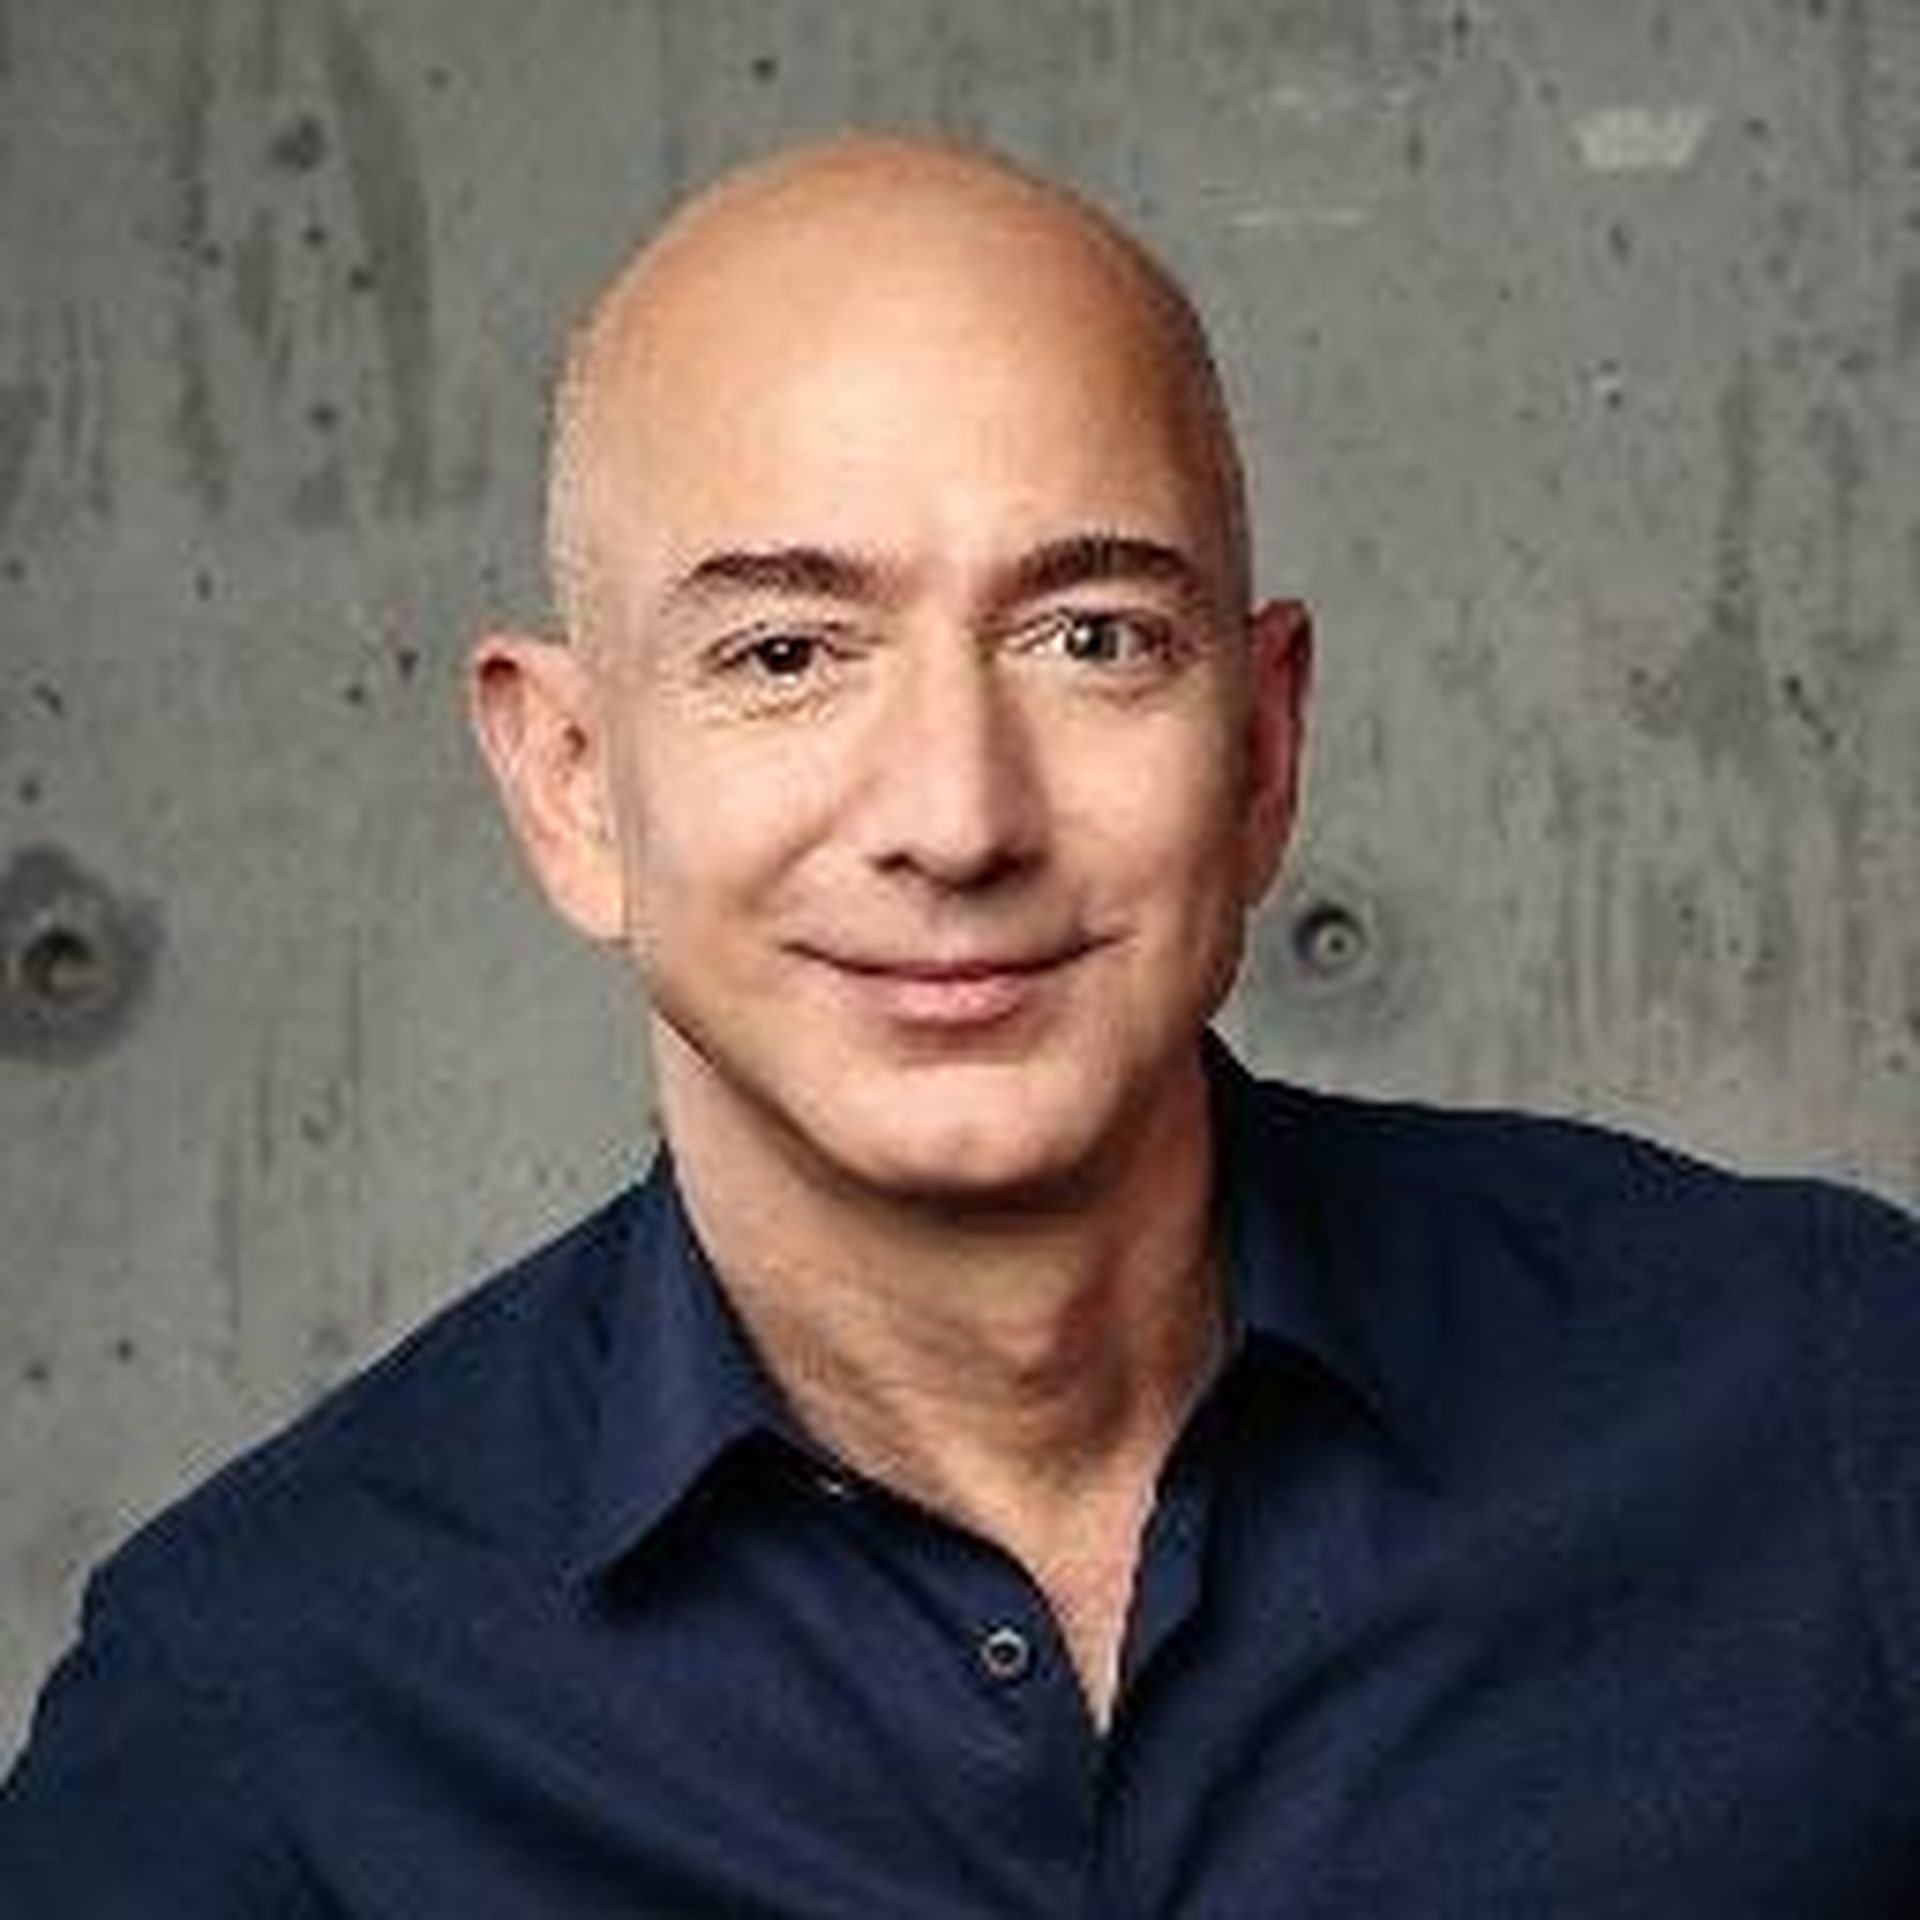 Amazon CEO Jeff Bezos: Stepping down